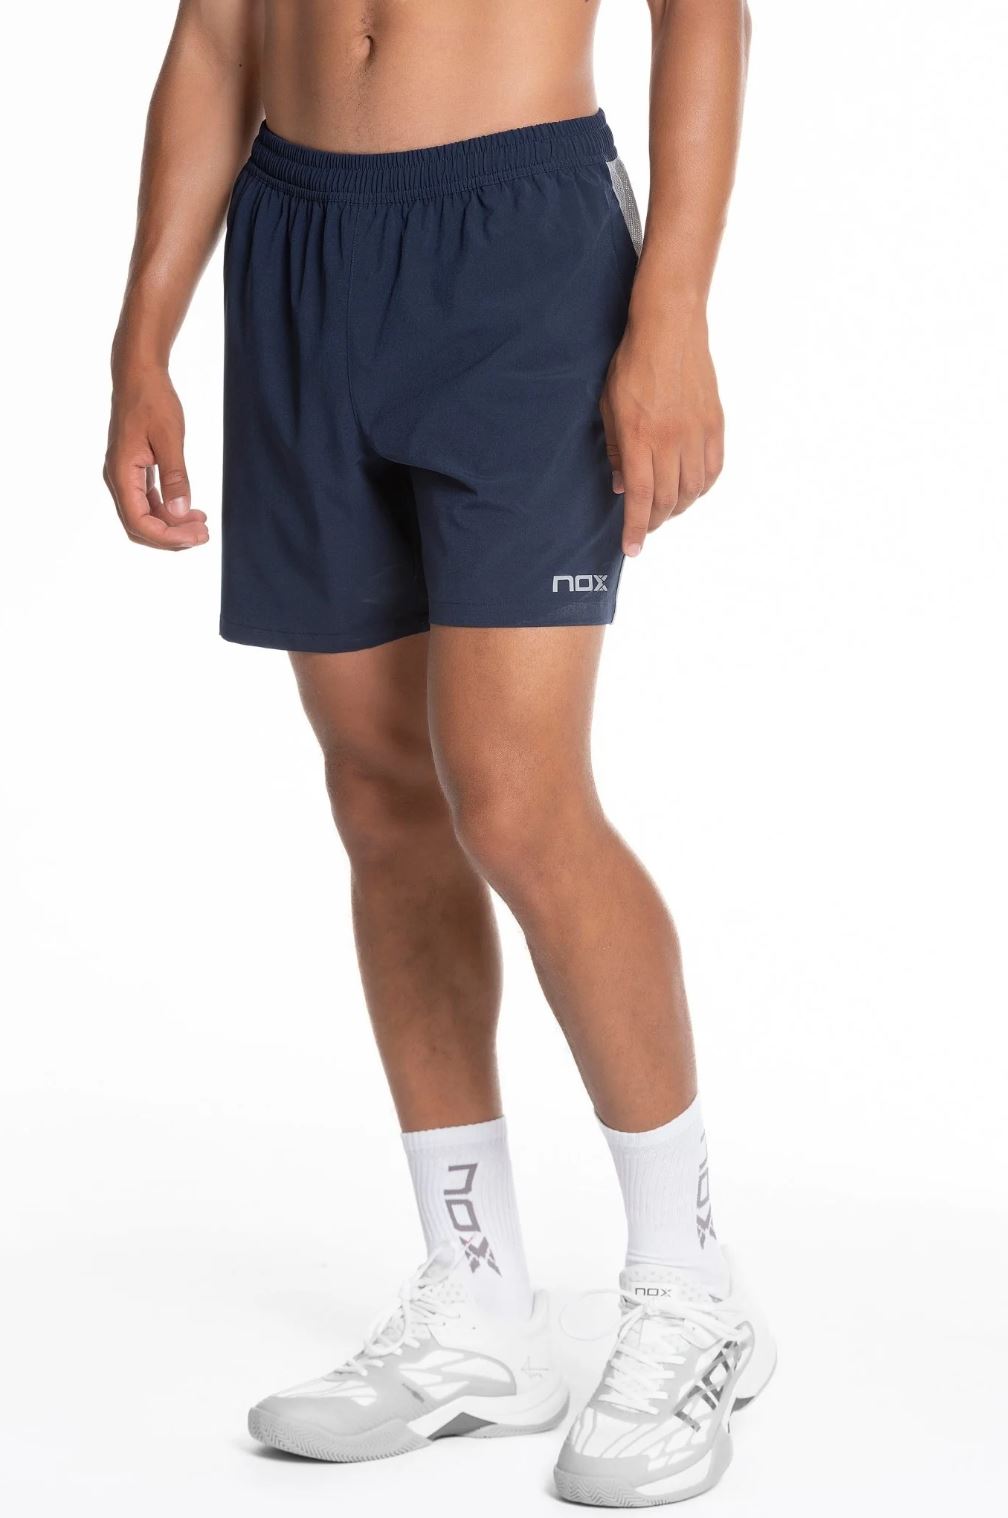 Nox Padel Shorts (Navy Blue)